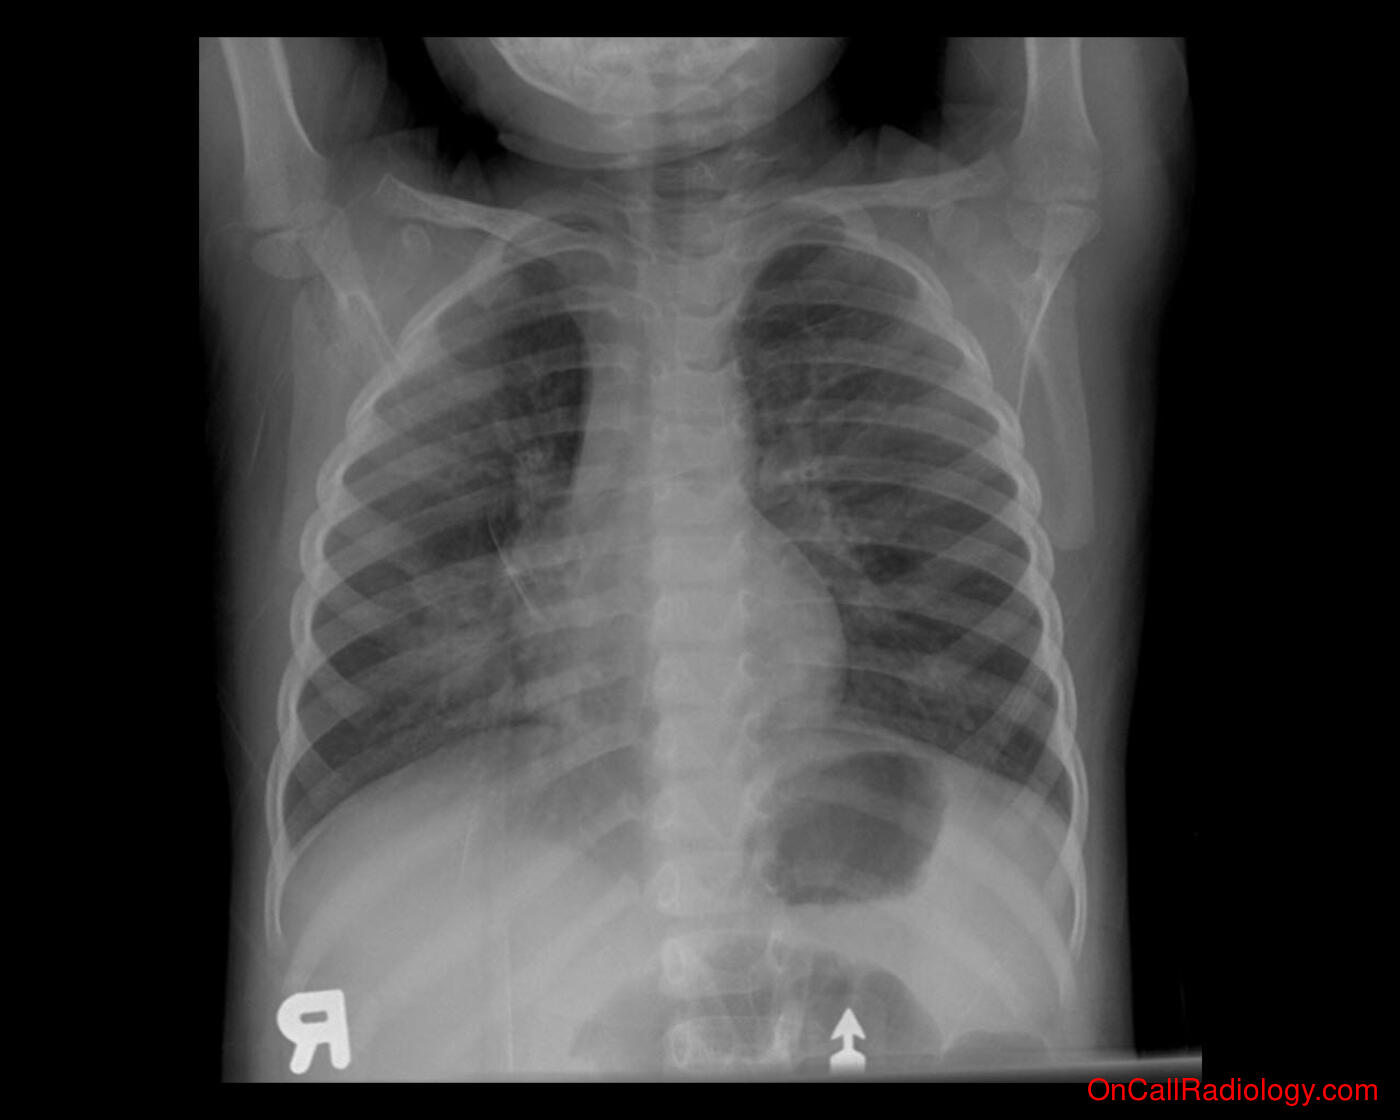 Pneumonia (Right middle lobe pneumonia  - Plain film, Radiograph)